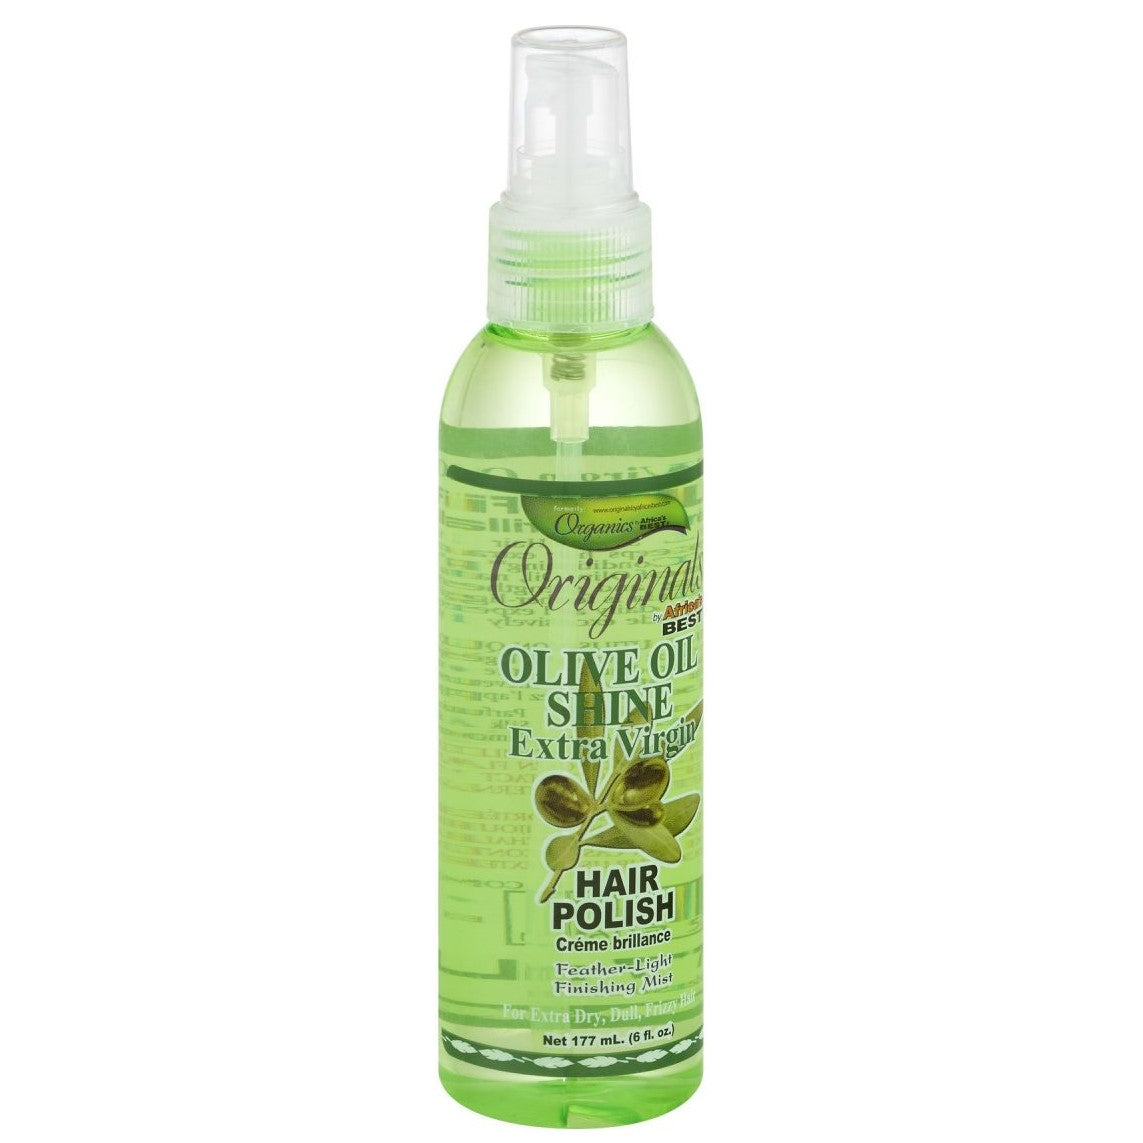 Afrikas beste olivenolje glans Extra Virgin Hair Polish Spray 177 ml 